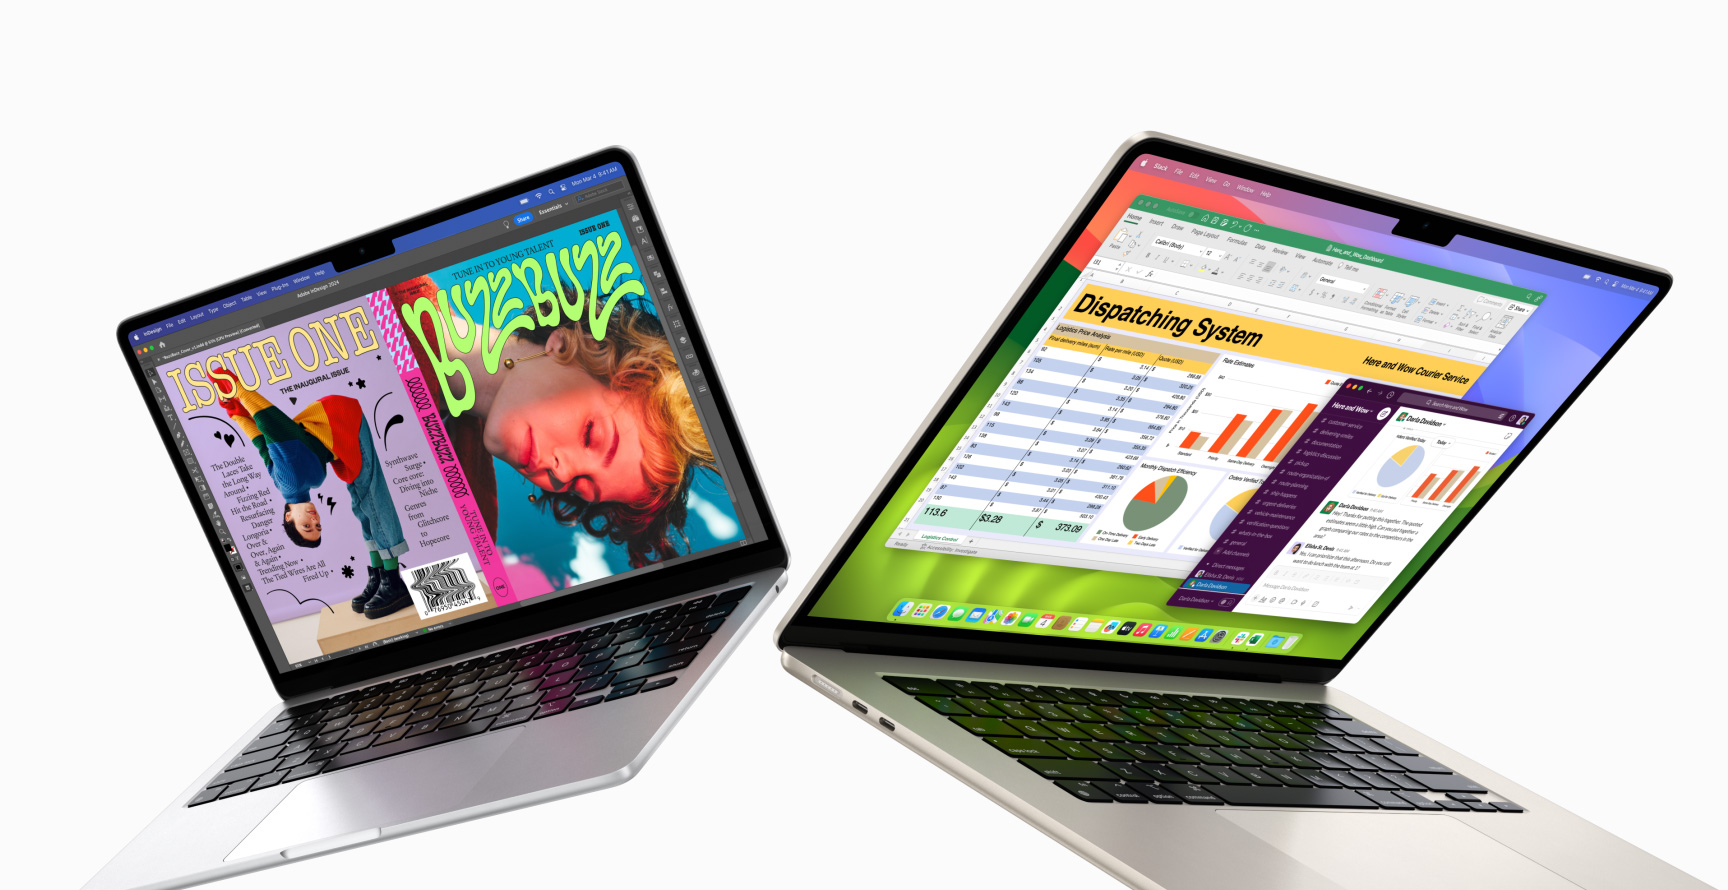 Djelomično otvoren 13-inčni MacBook Air slijeva i 15-inčni MacBook Air desna. 13-inčni zaslon prikazuje živopisnu naslovnicu napravljenu aplikacijom InDesign. 15-inčni zaslon prikazuje Microsoft Excel i Slack.